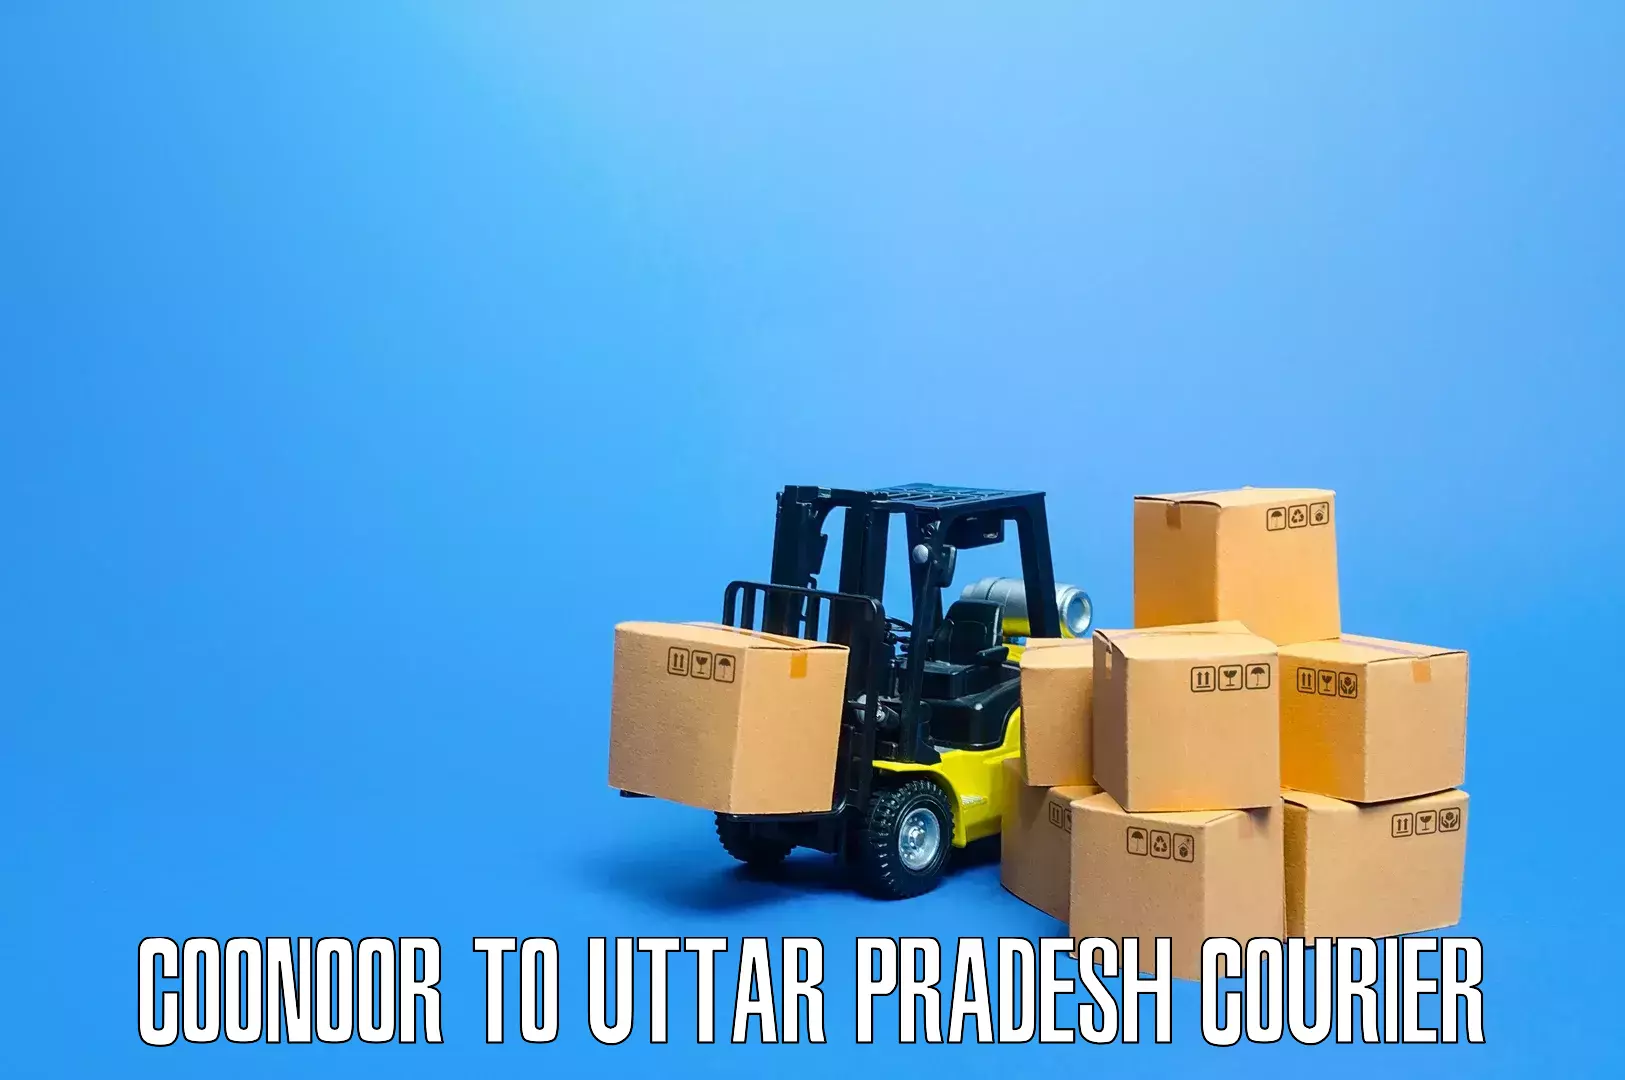 Professional moving company Coonoor to Uttar Pradesh